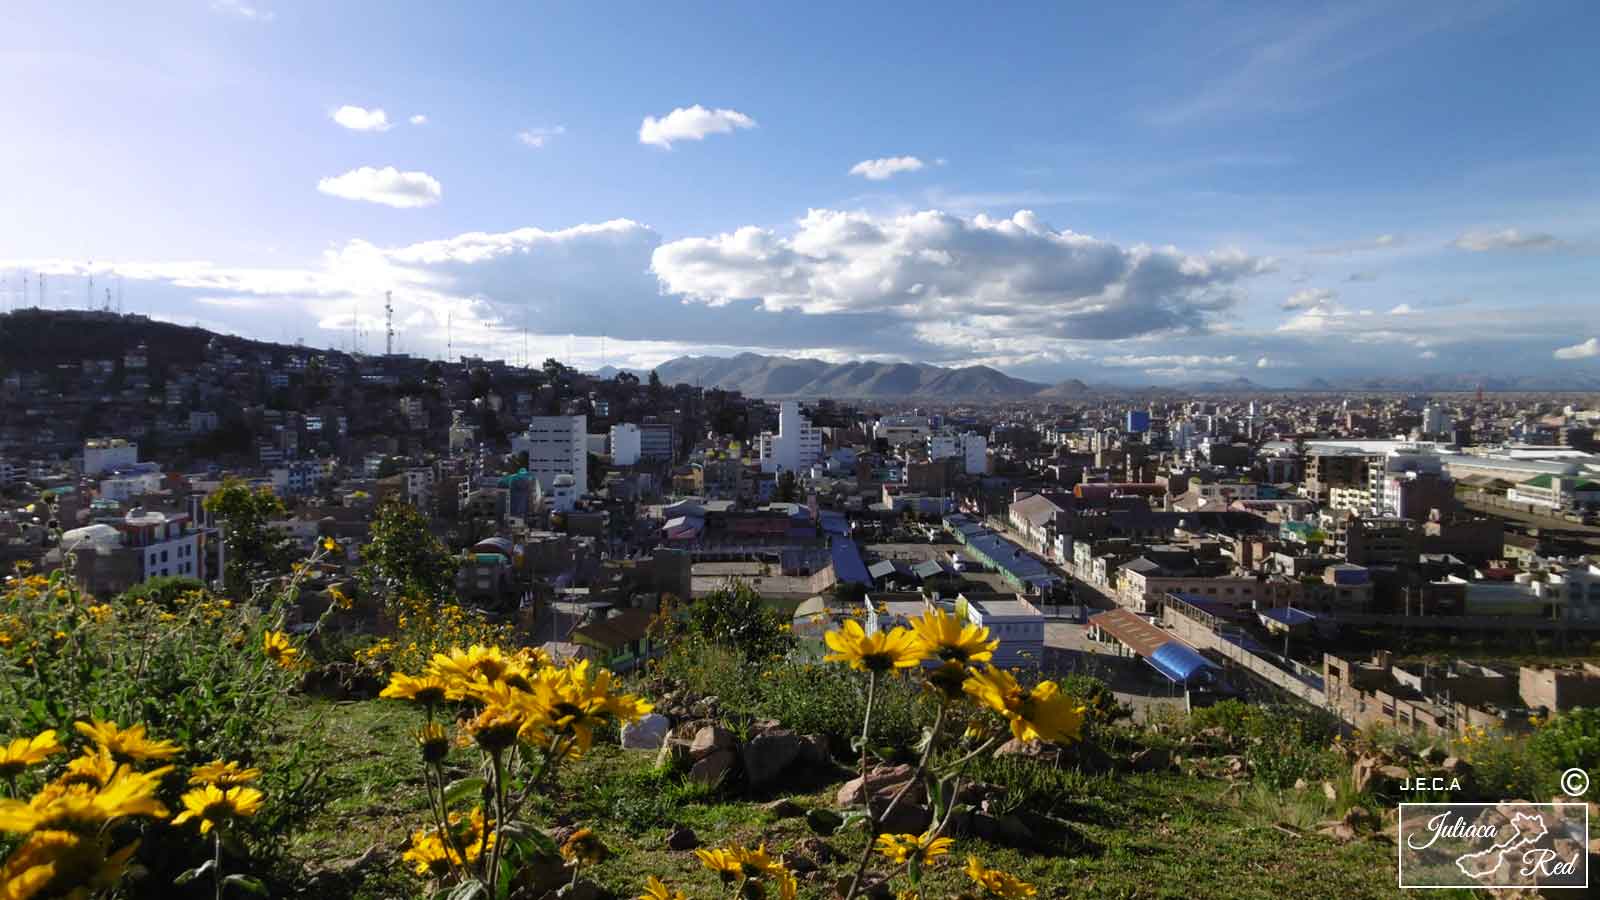 Vista panorámica de la ciudad de Juliaca